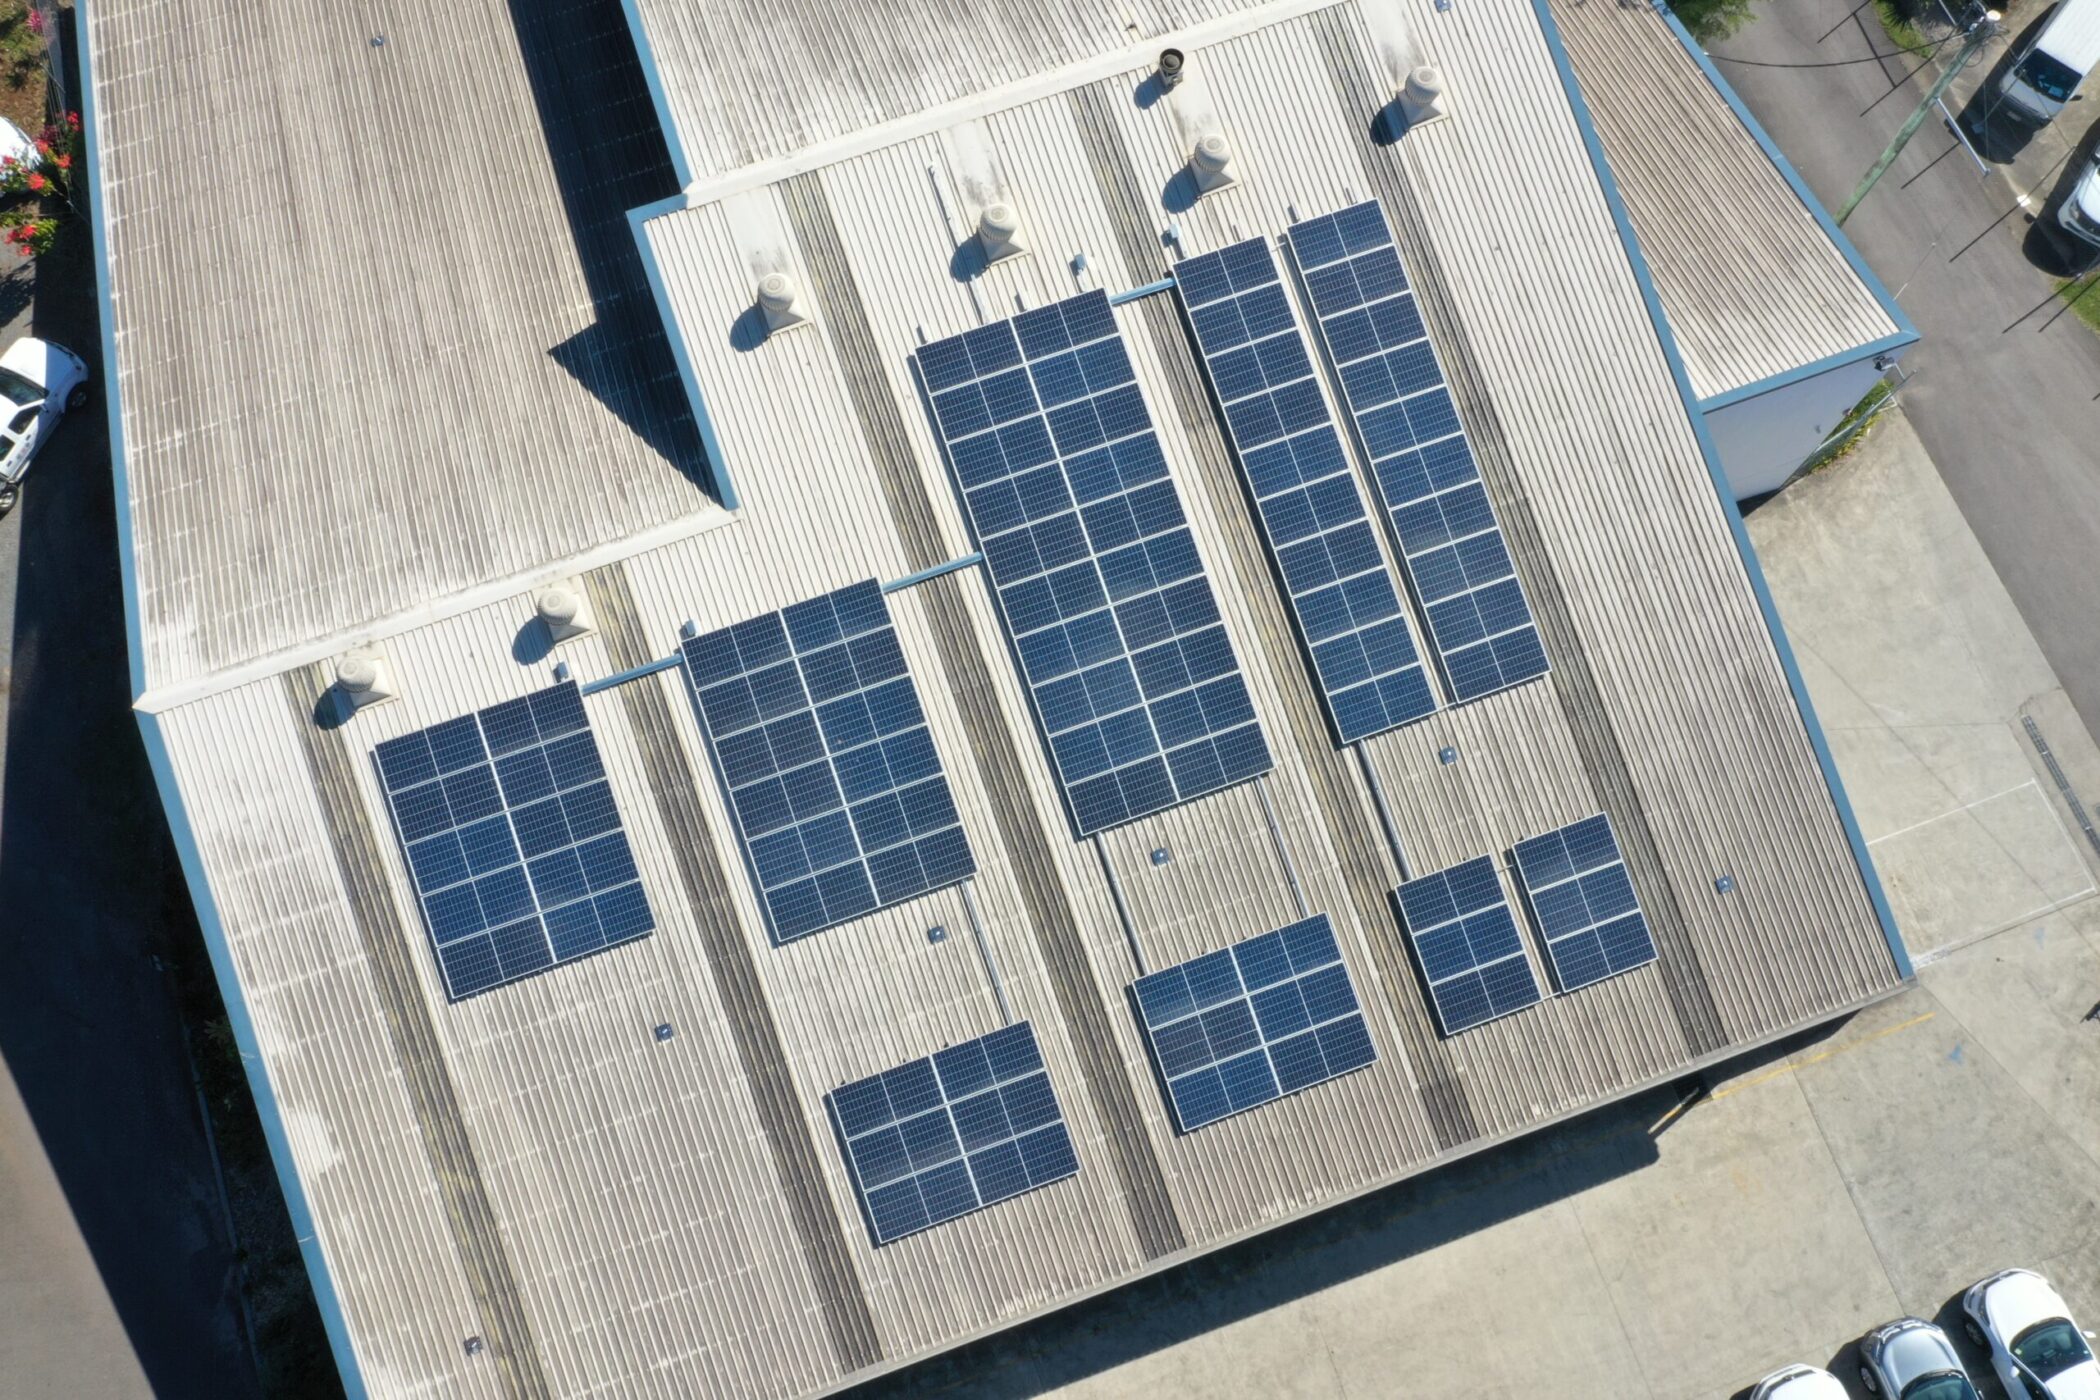 Commercial solar installation by sunlogics